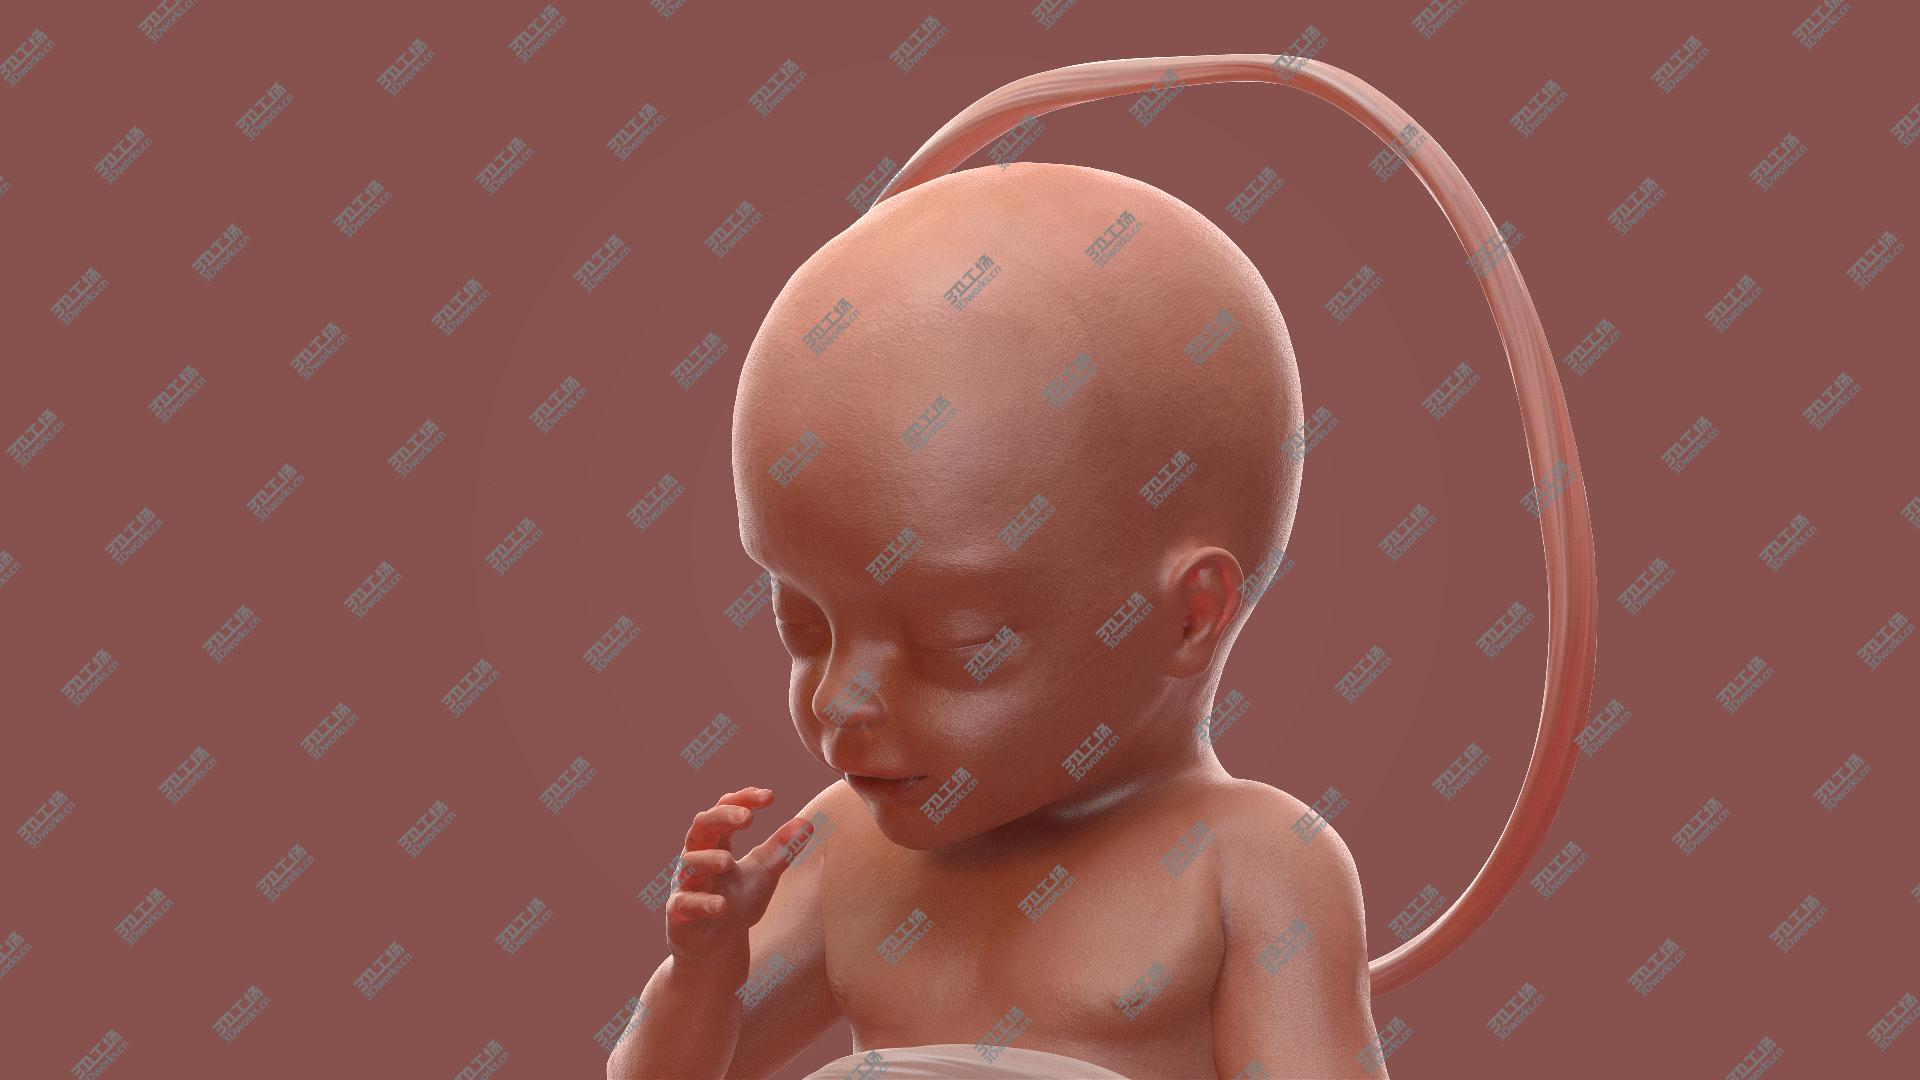 images/goods_img/20210313/3D Human Fetus at 24 Weeks Rigged model/2.jpg